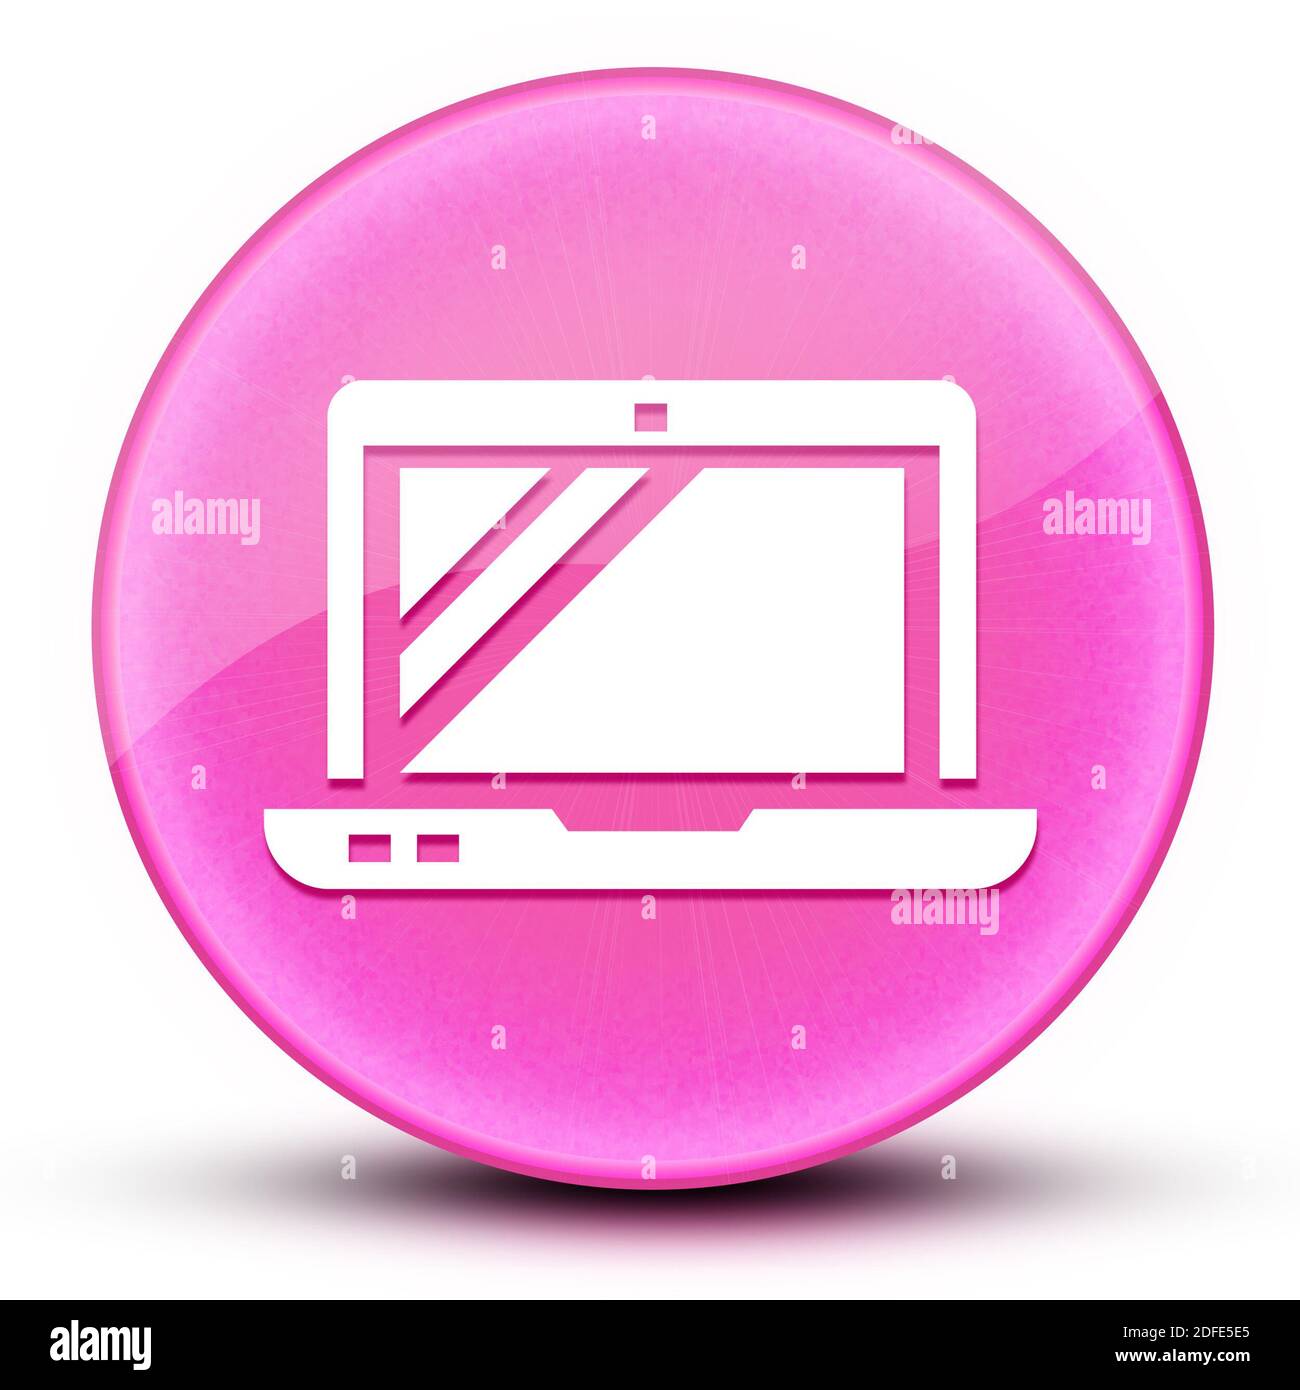 Technical skill eyeball glossy elegant pink round button abstract illustration Stock Photo